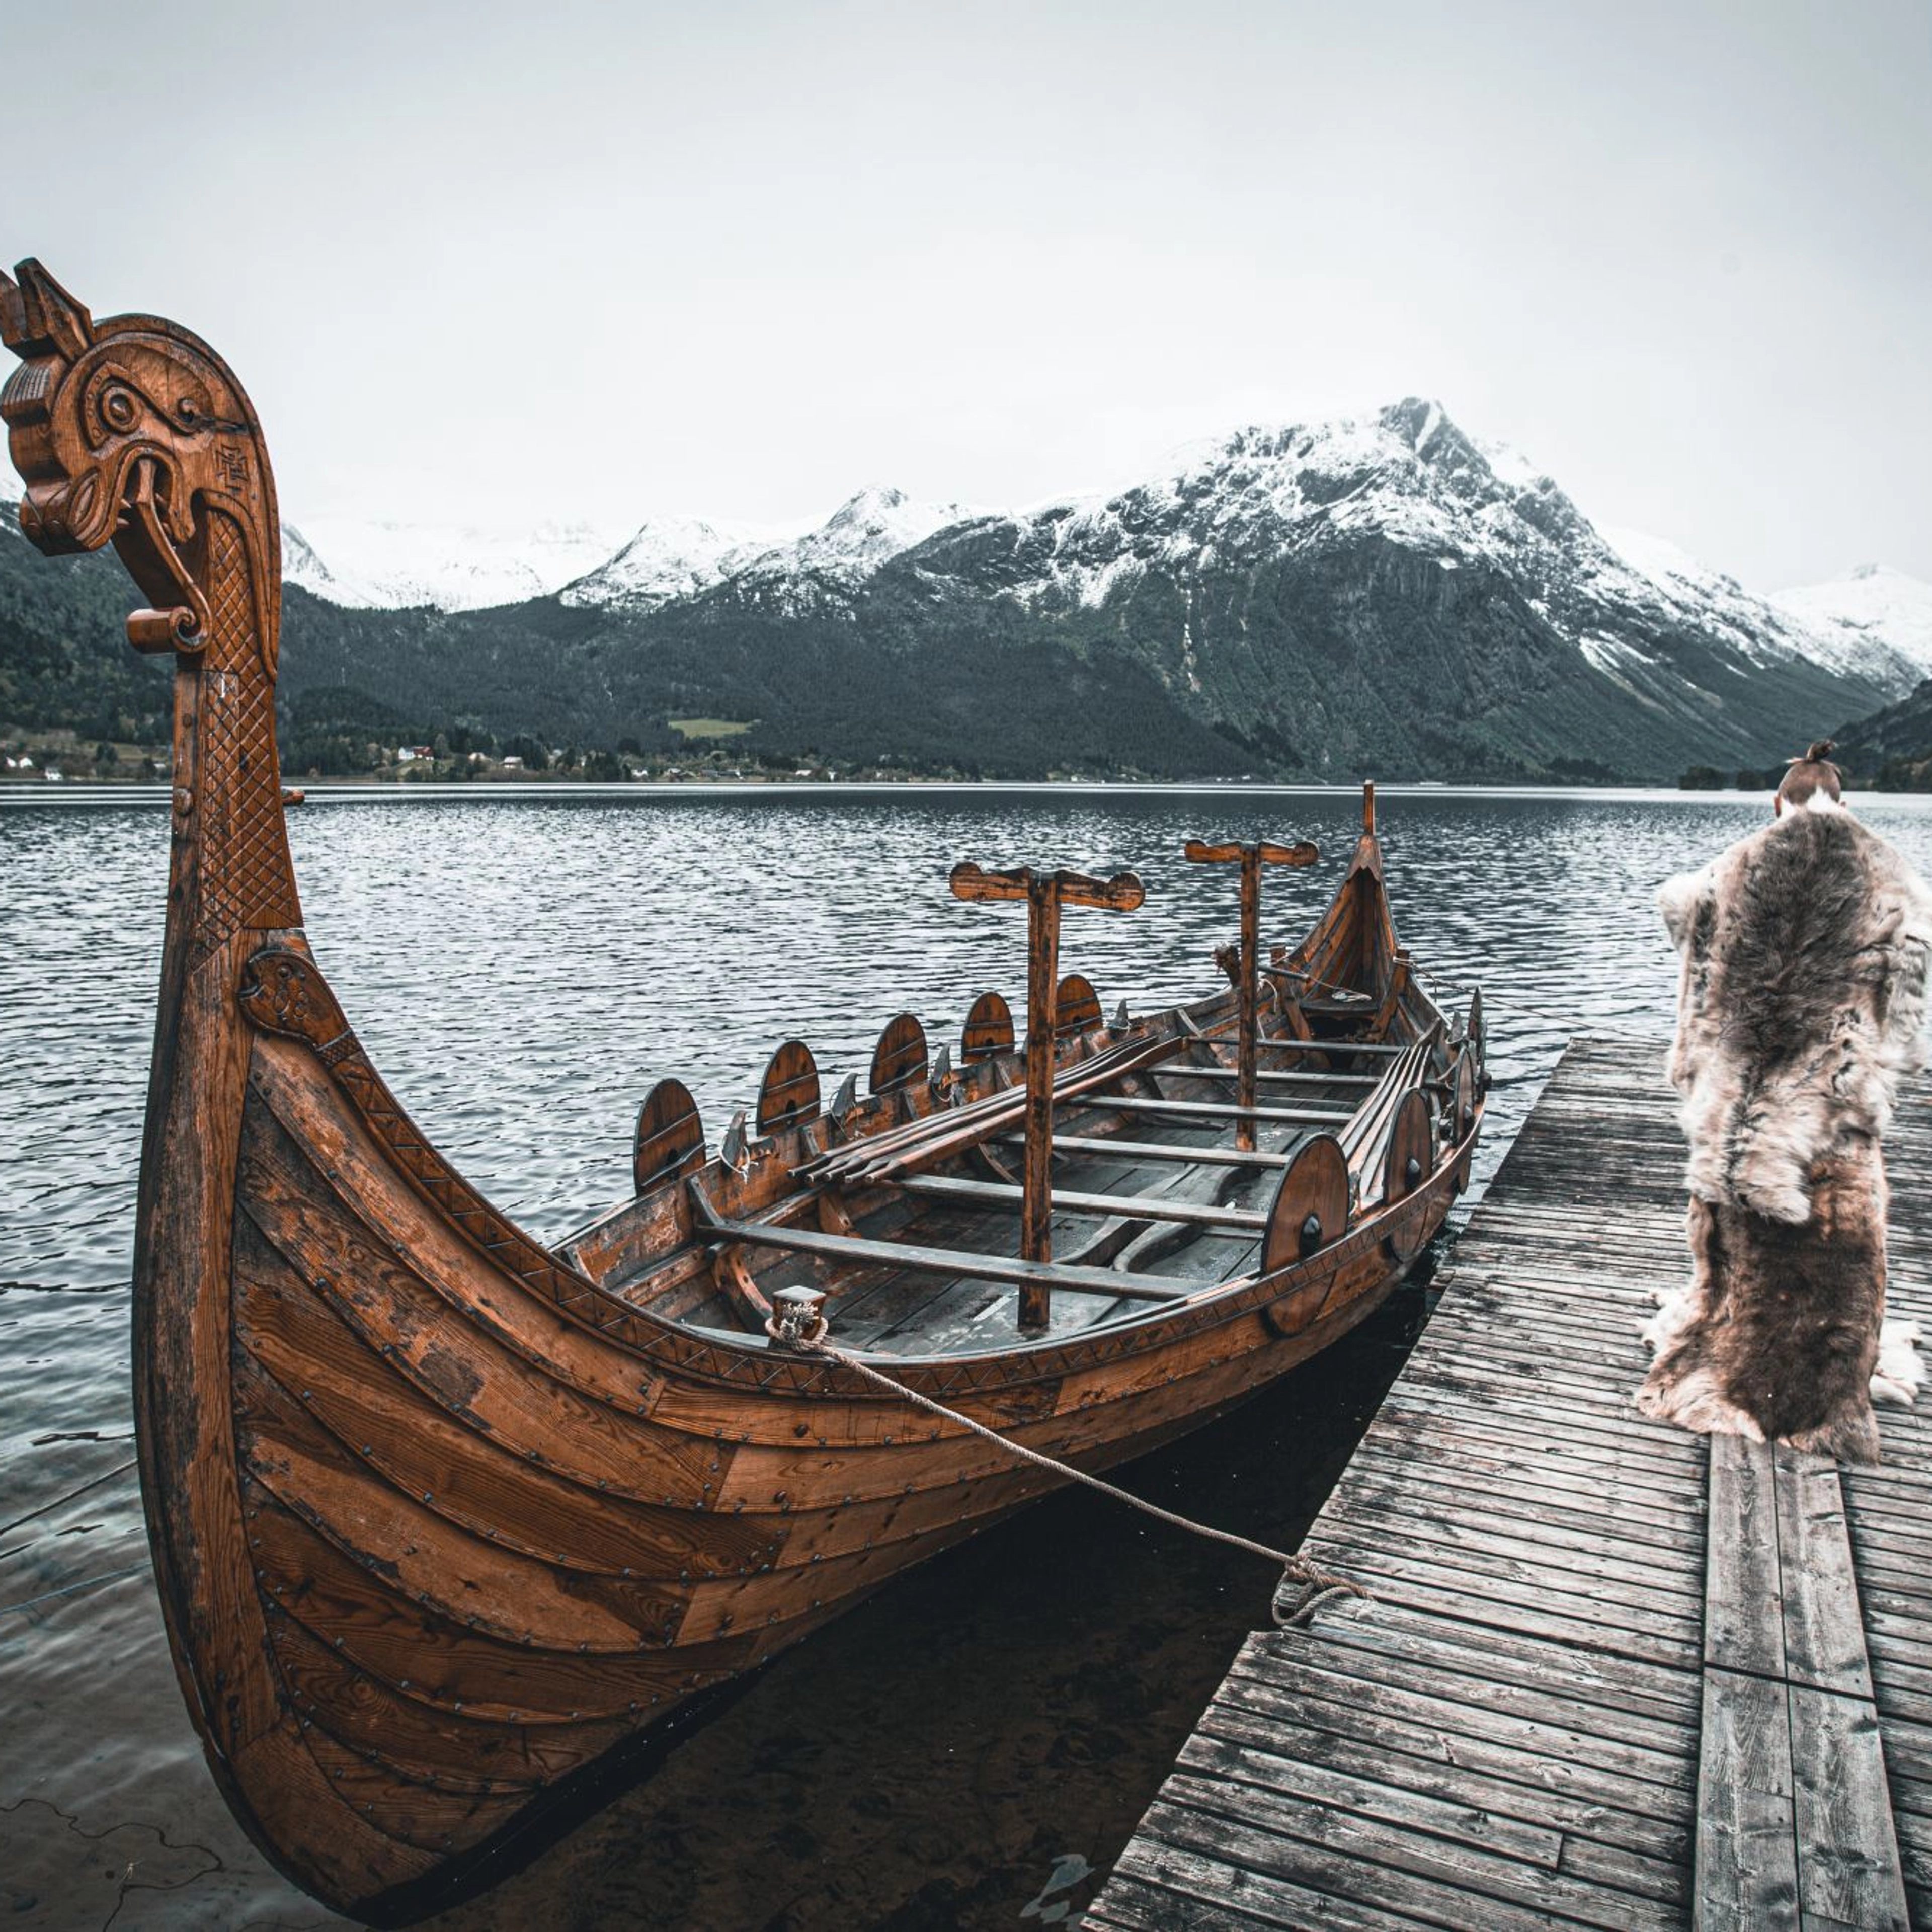 Wiking ship - Norway